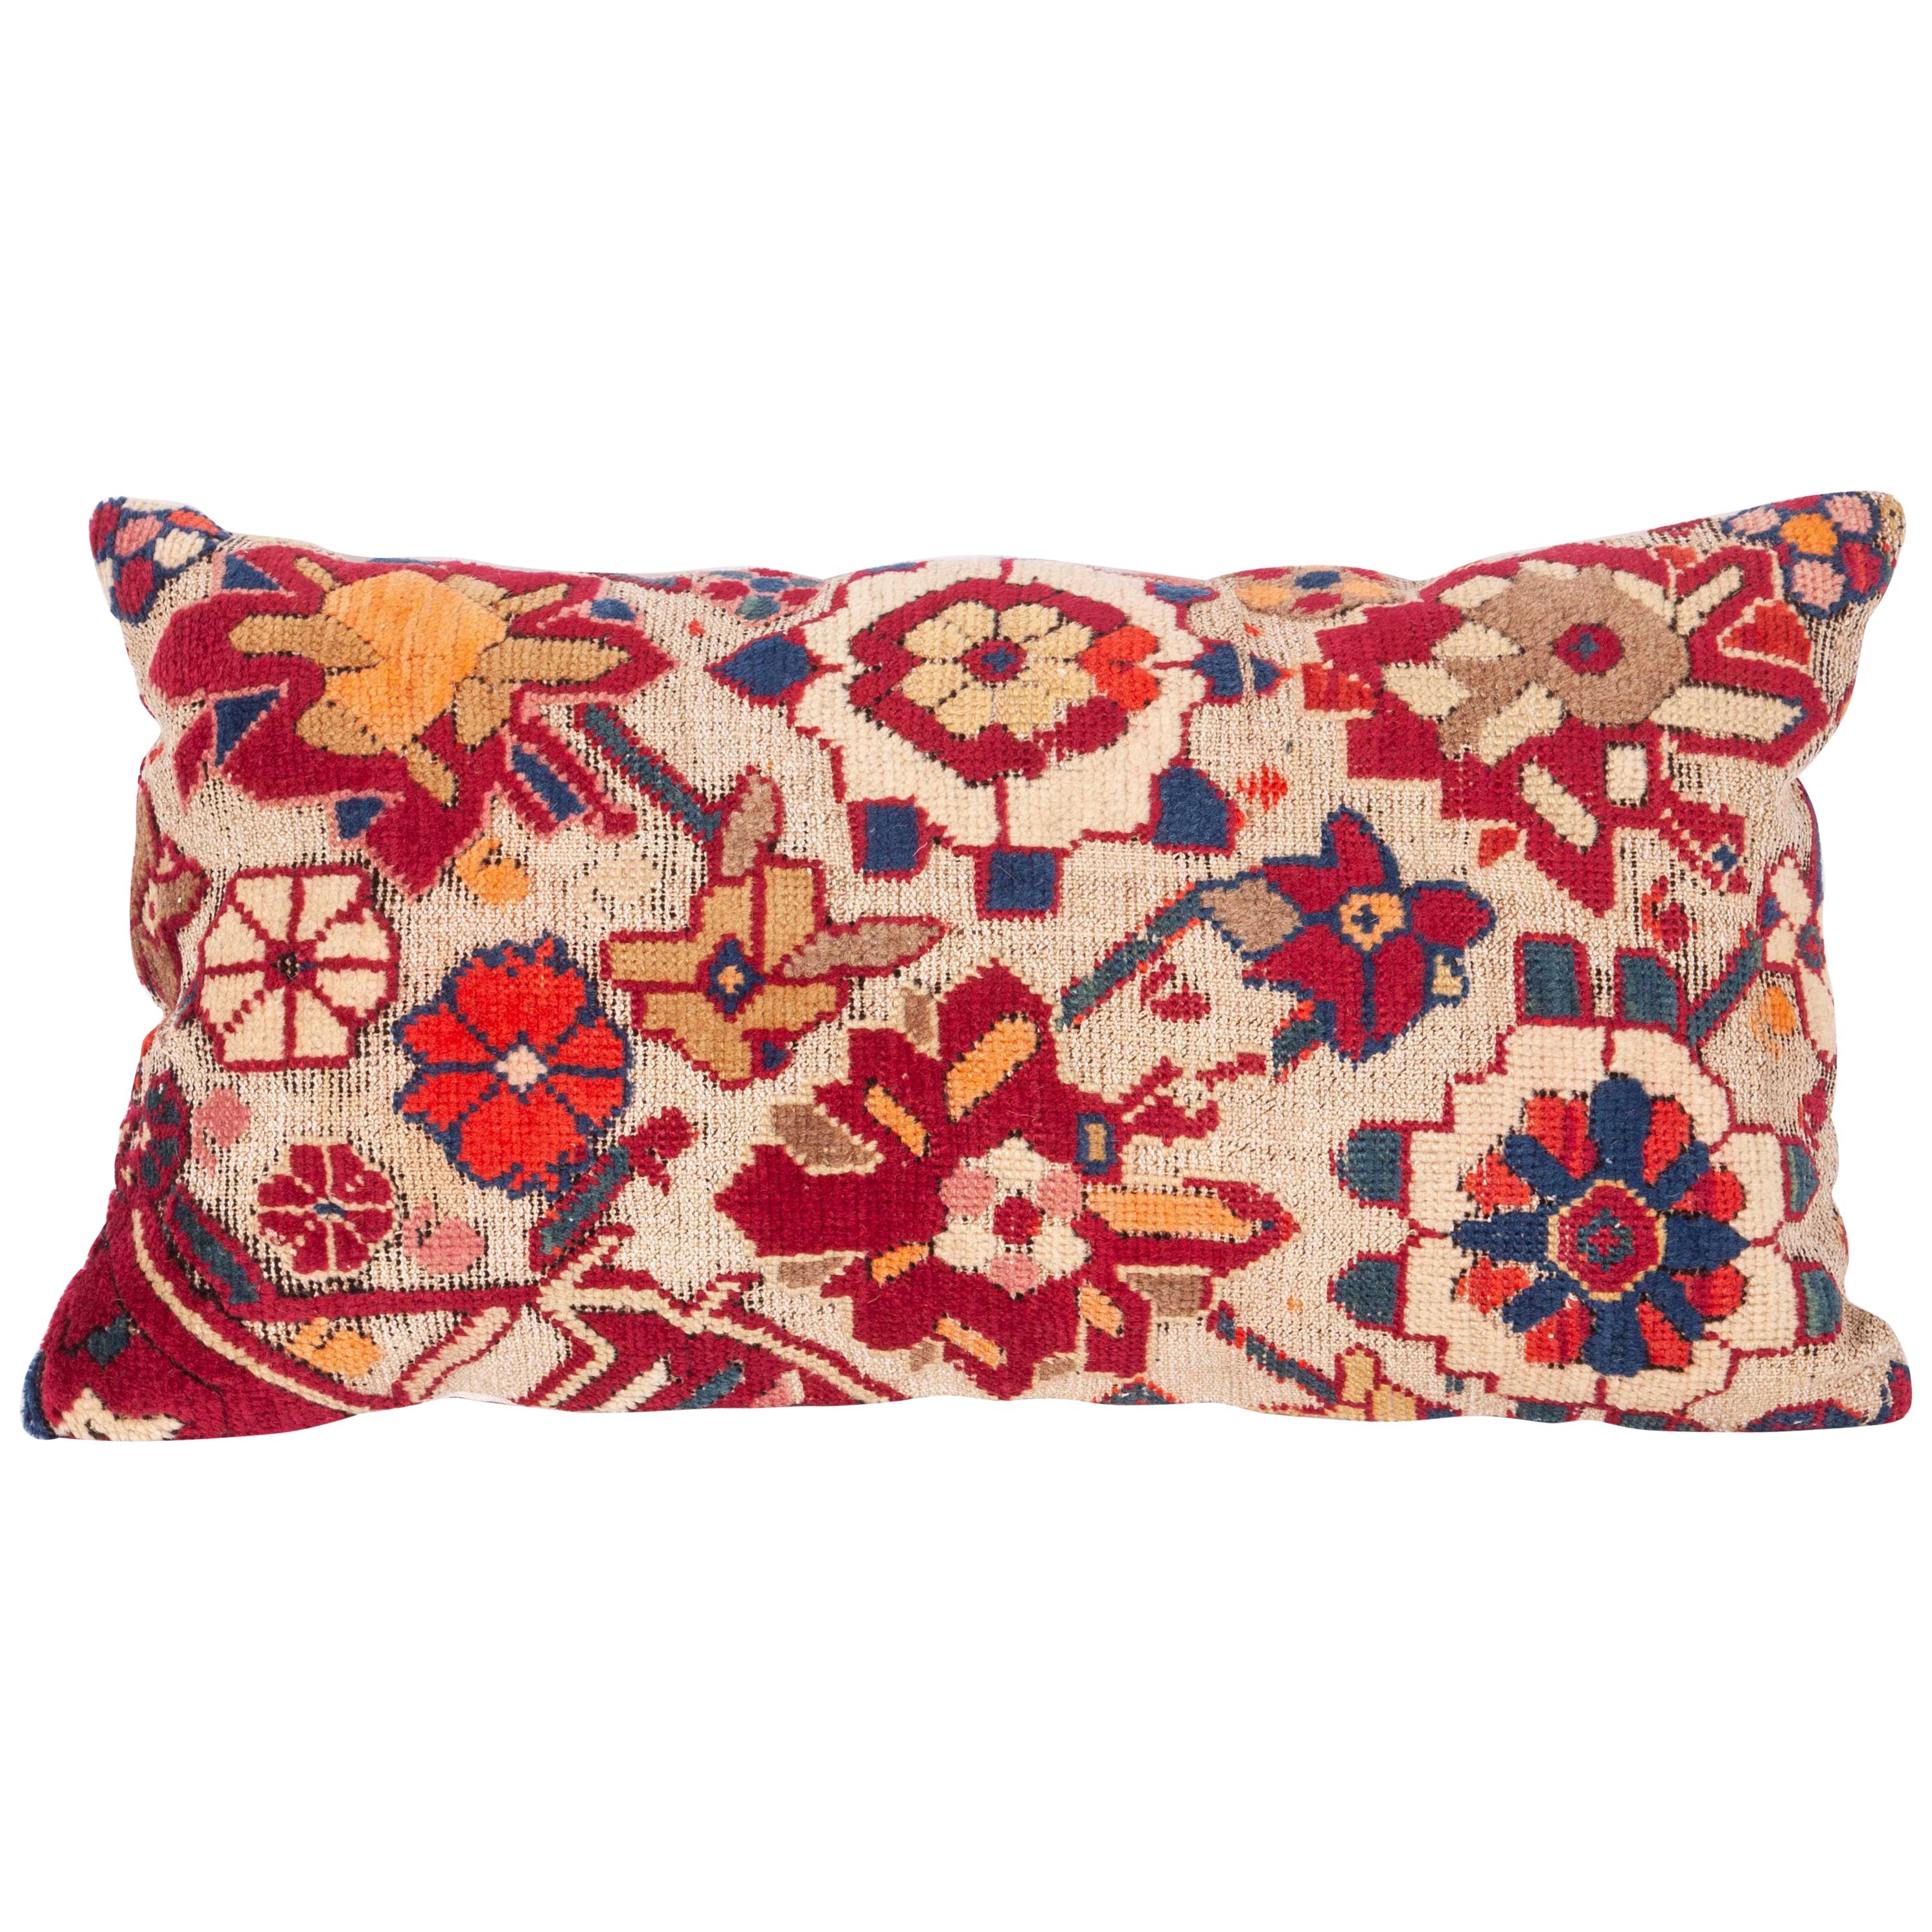 Antique Cushion / Pillow Case Fashioned from an Armenian Shusha Rug